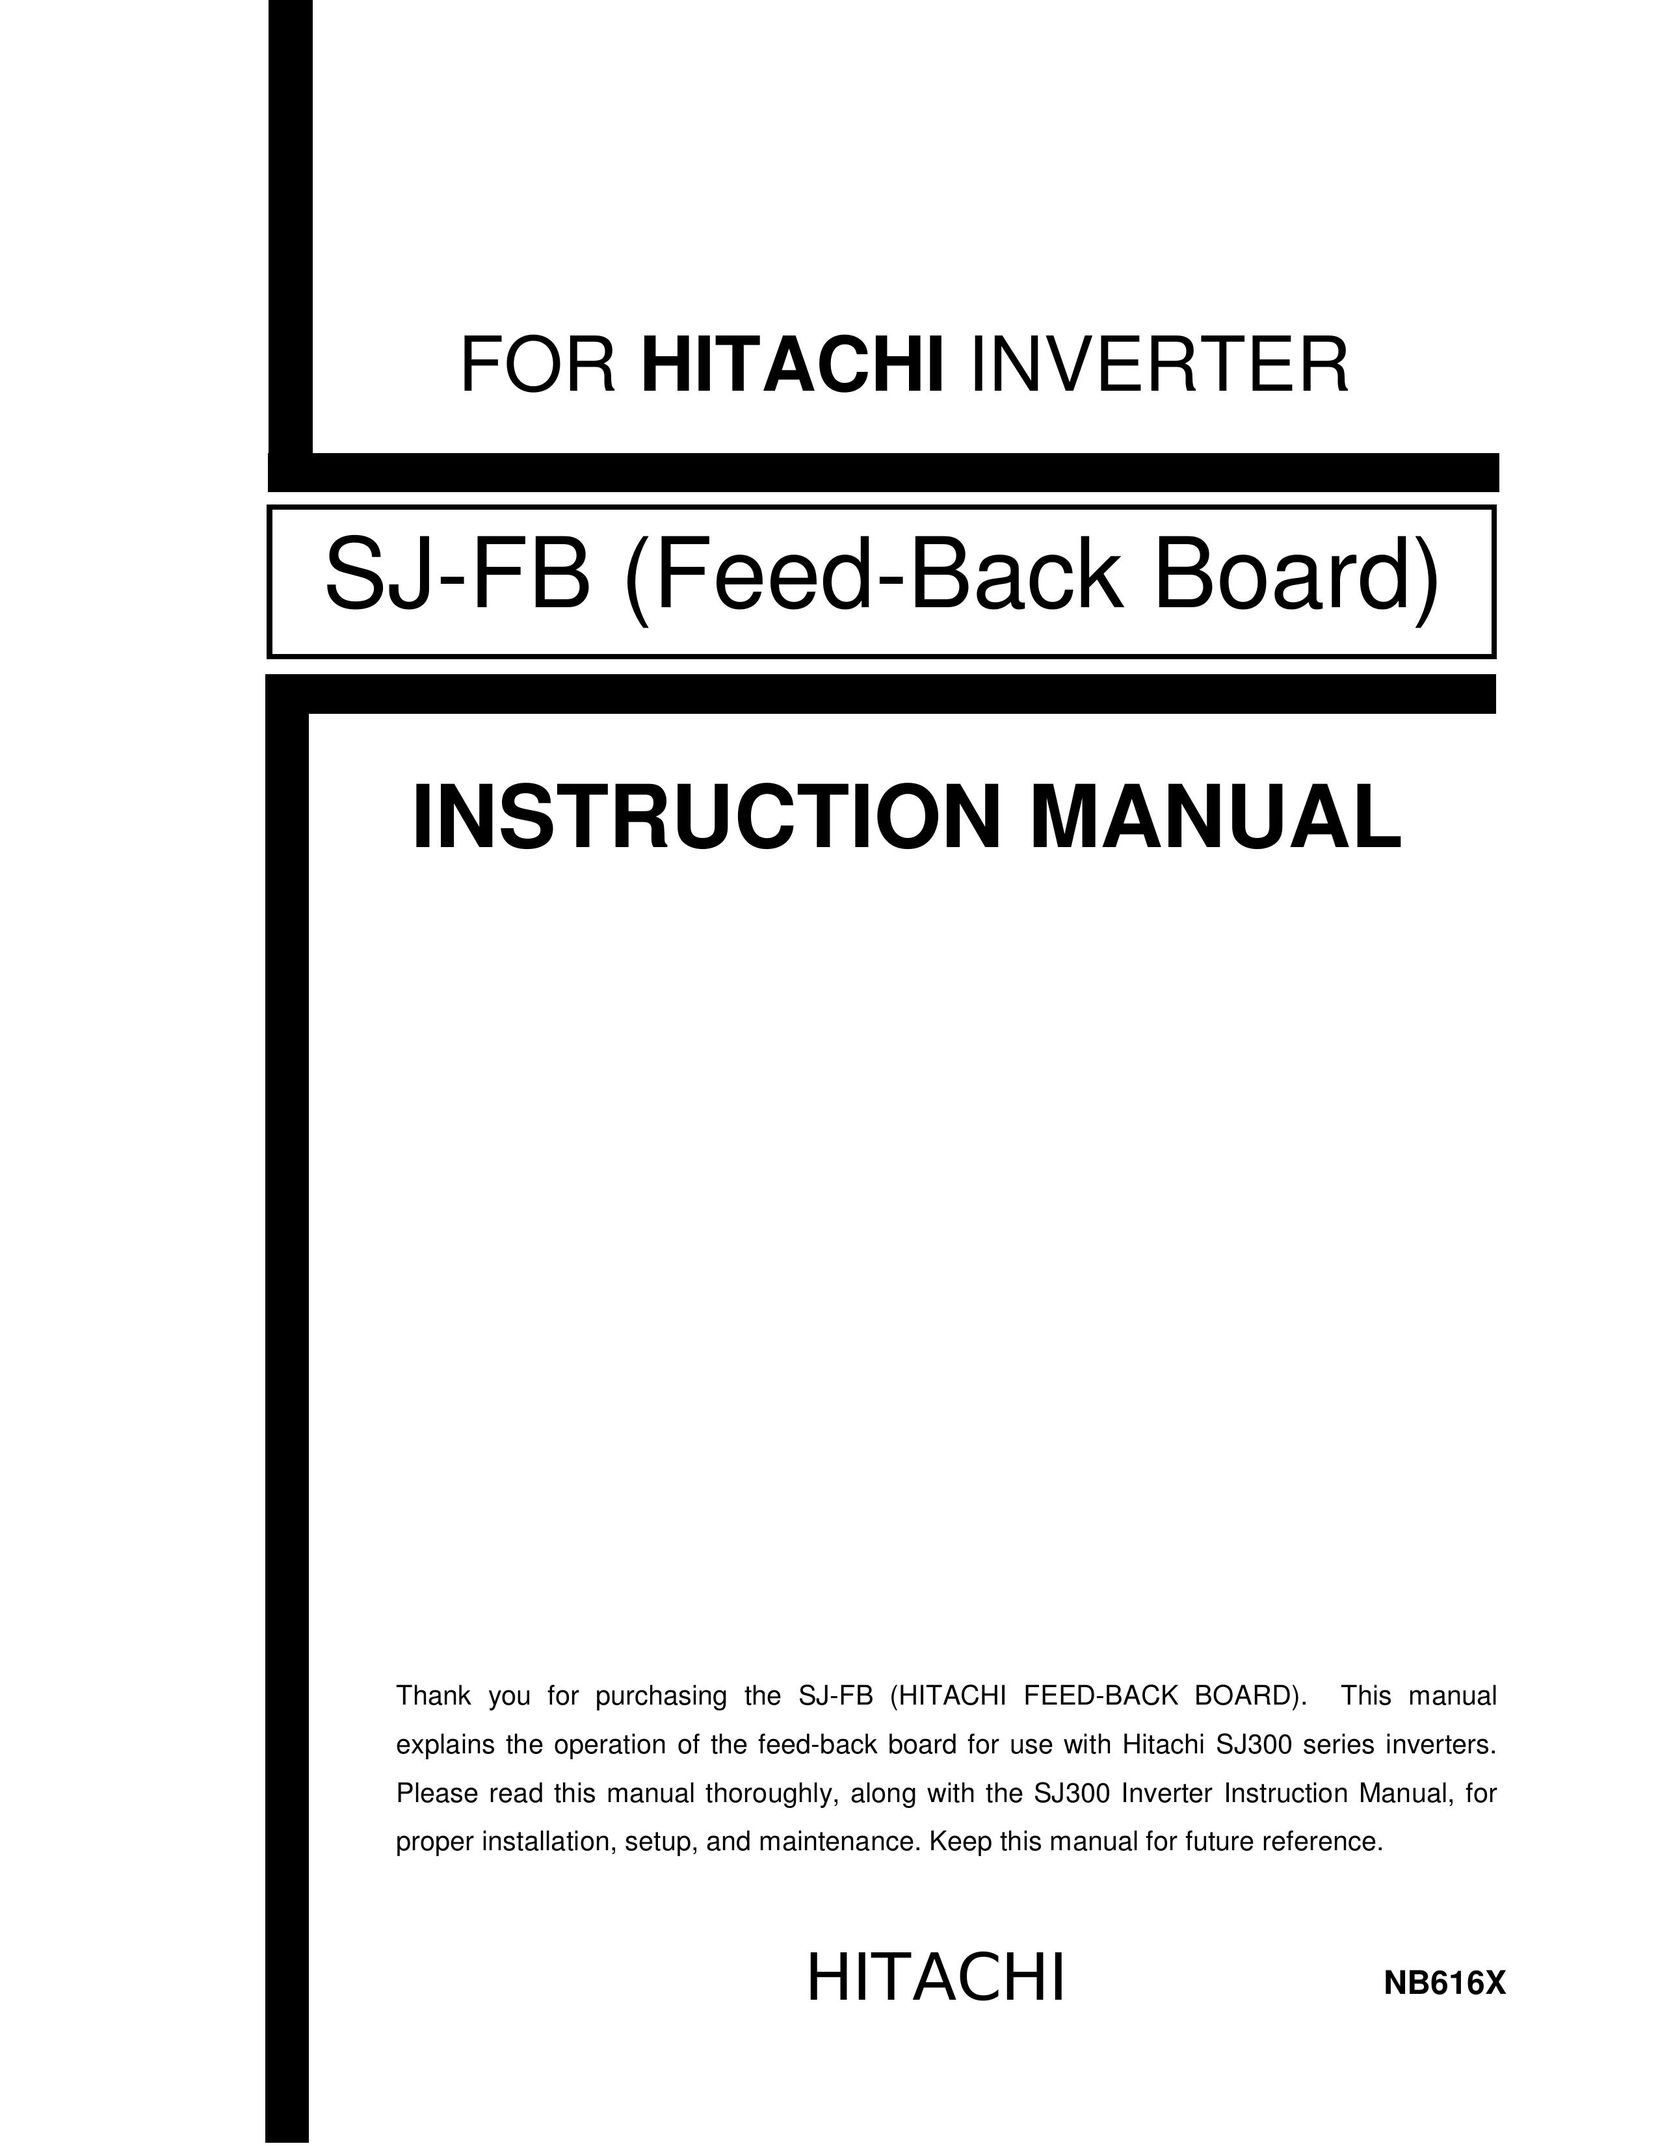 Hitachi NB616X Welder User Manual